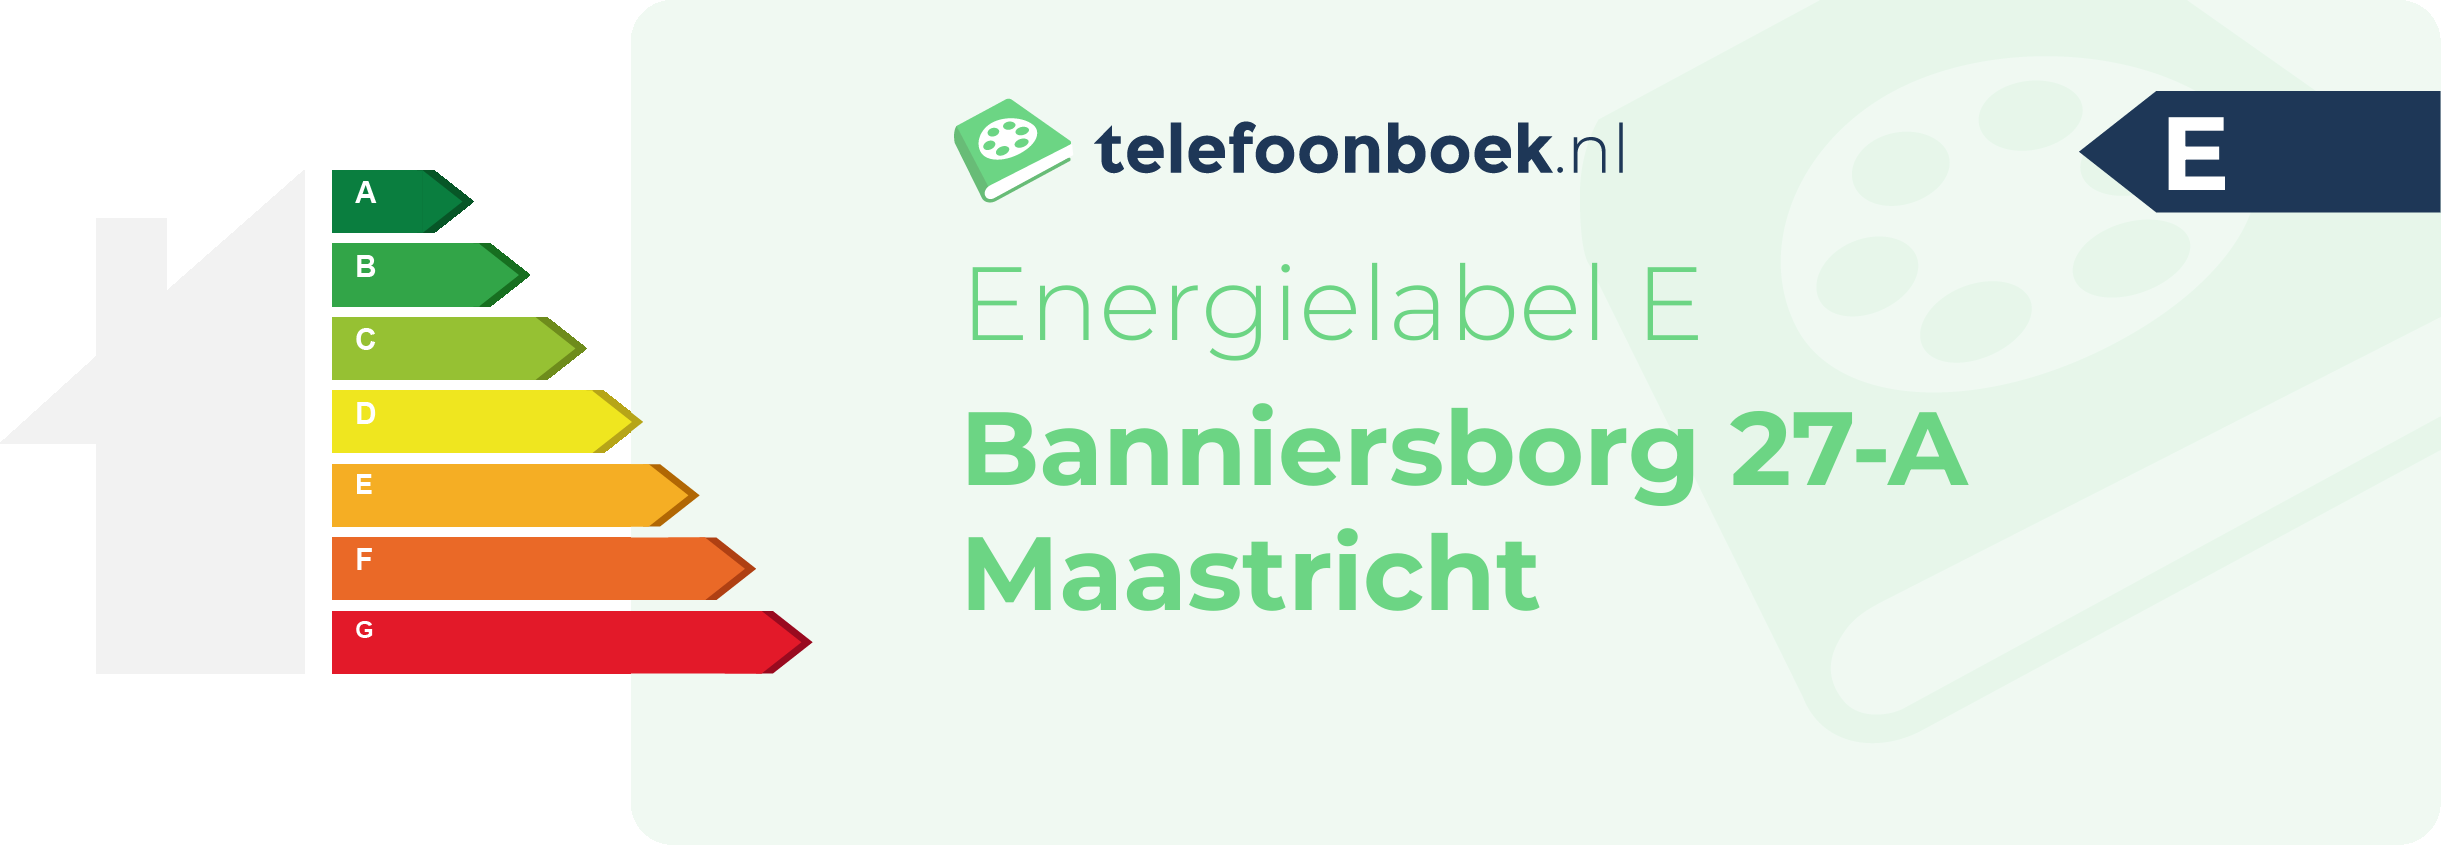 Energielabel Banniersborg 27-A Maastricht